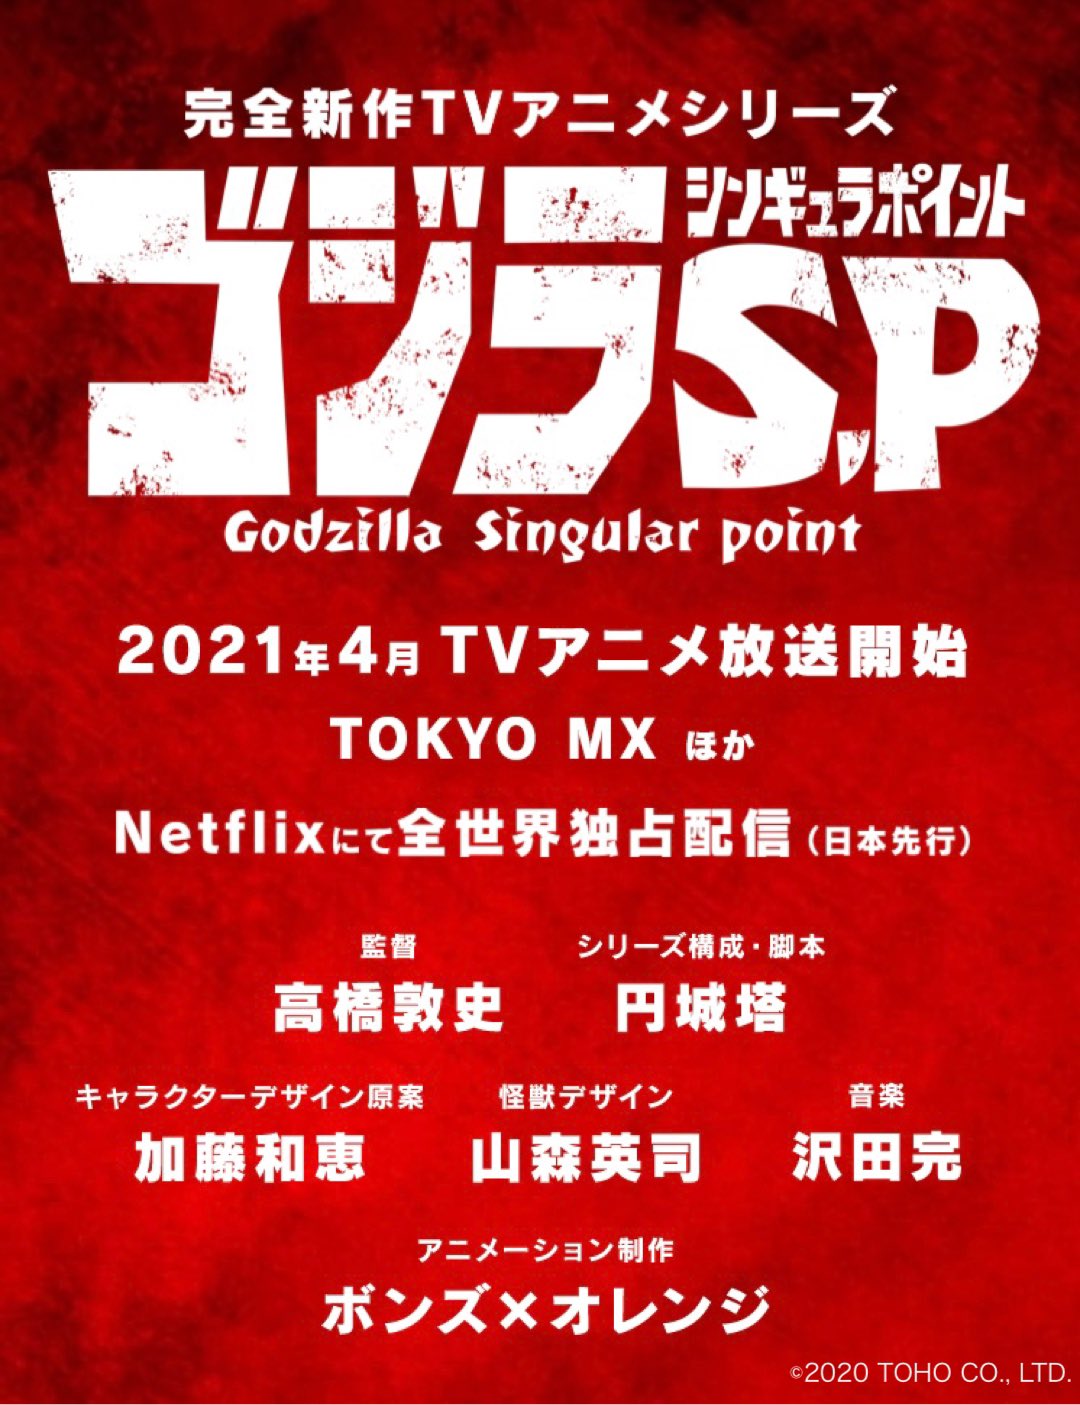 Godzilla Singular Point Anime Stomps to Netflix in Japan on March 25